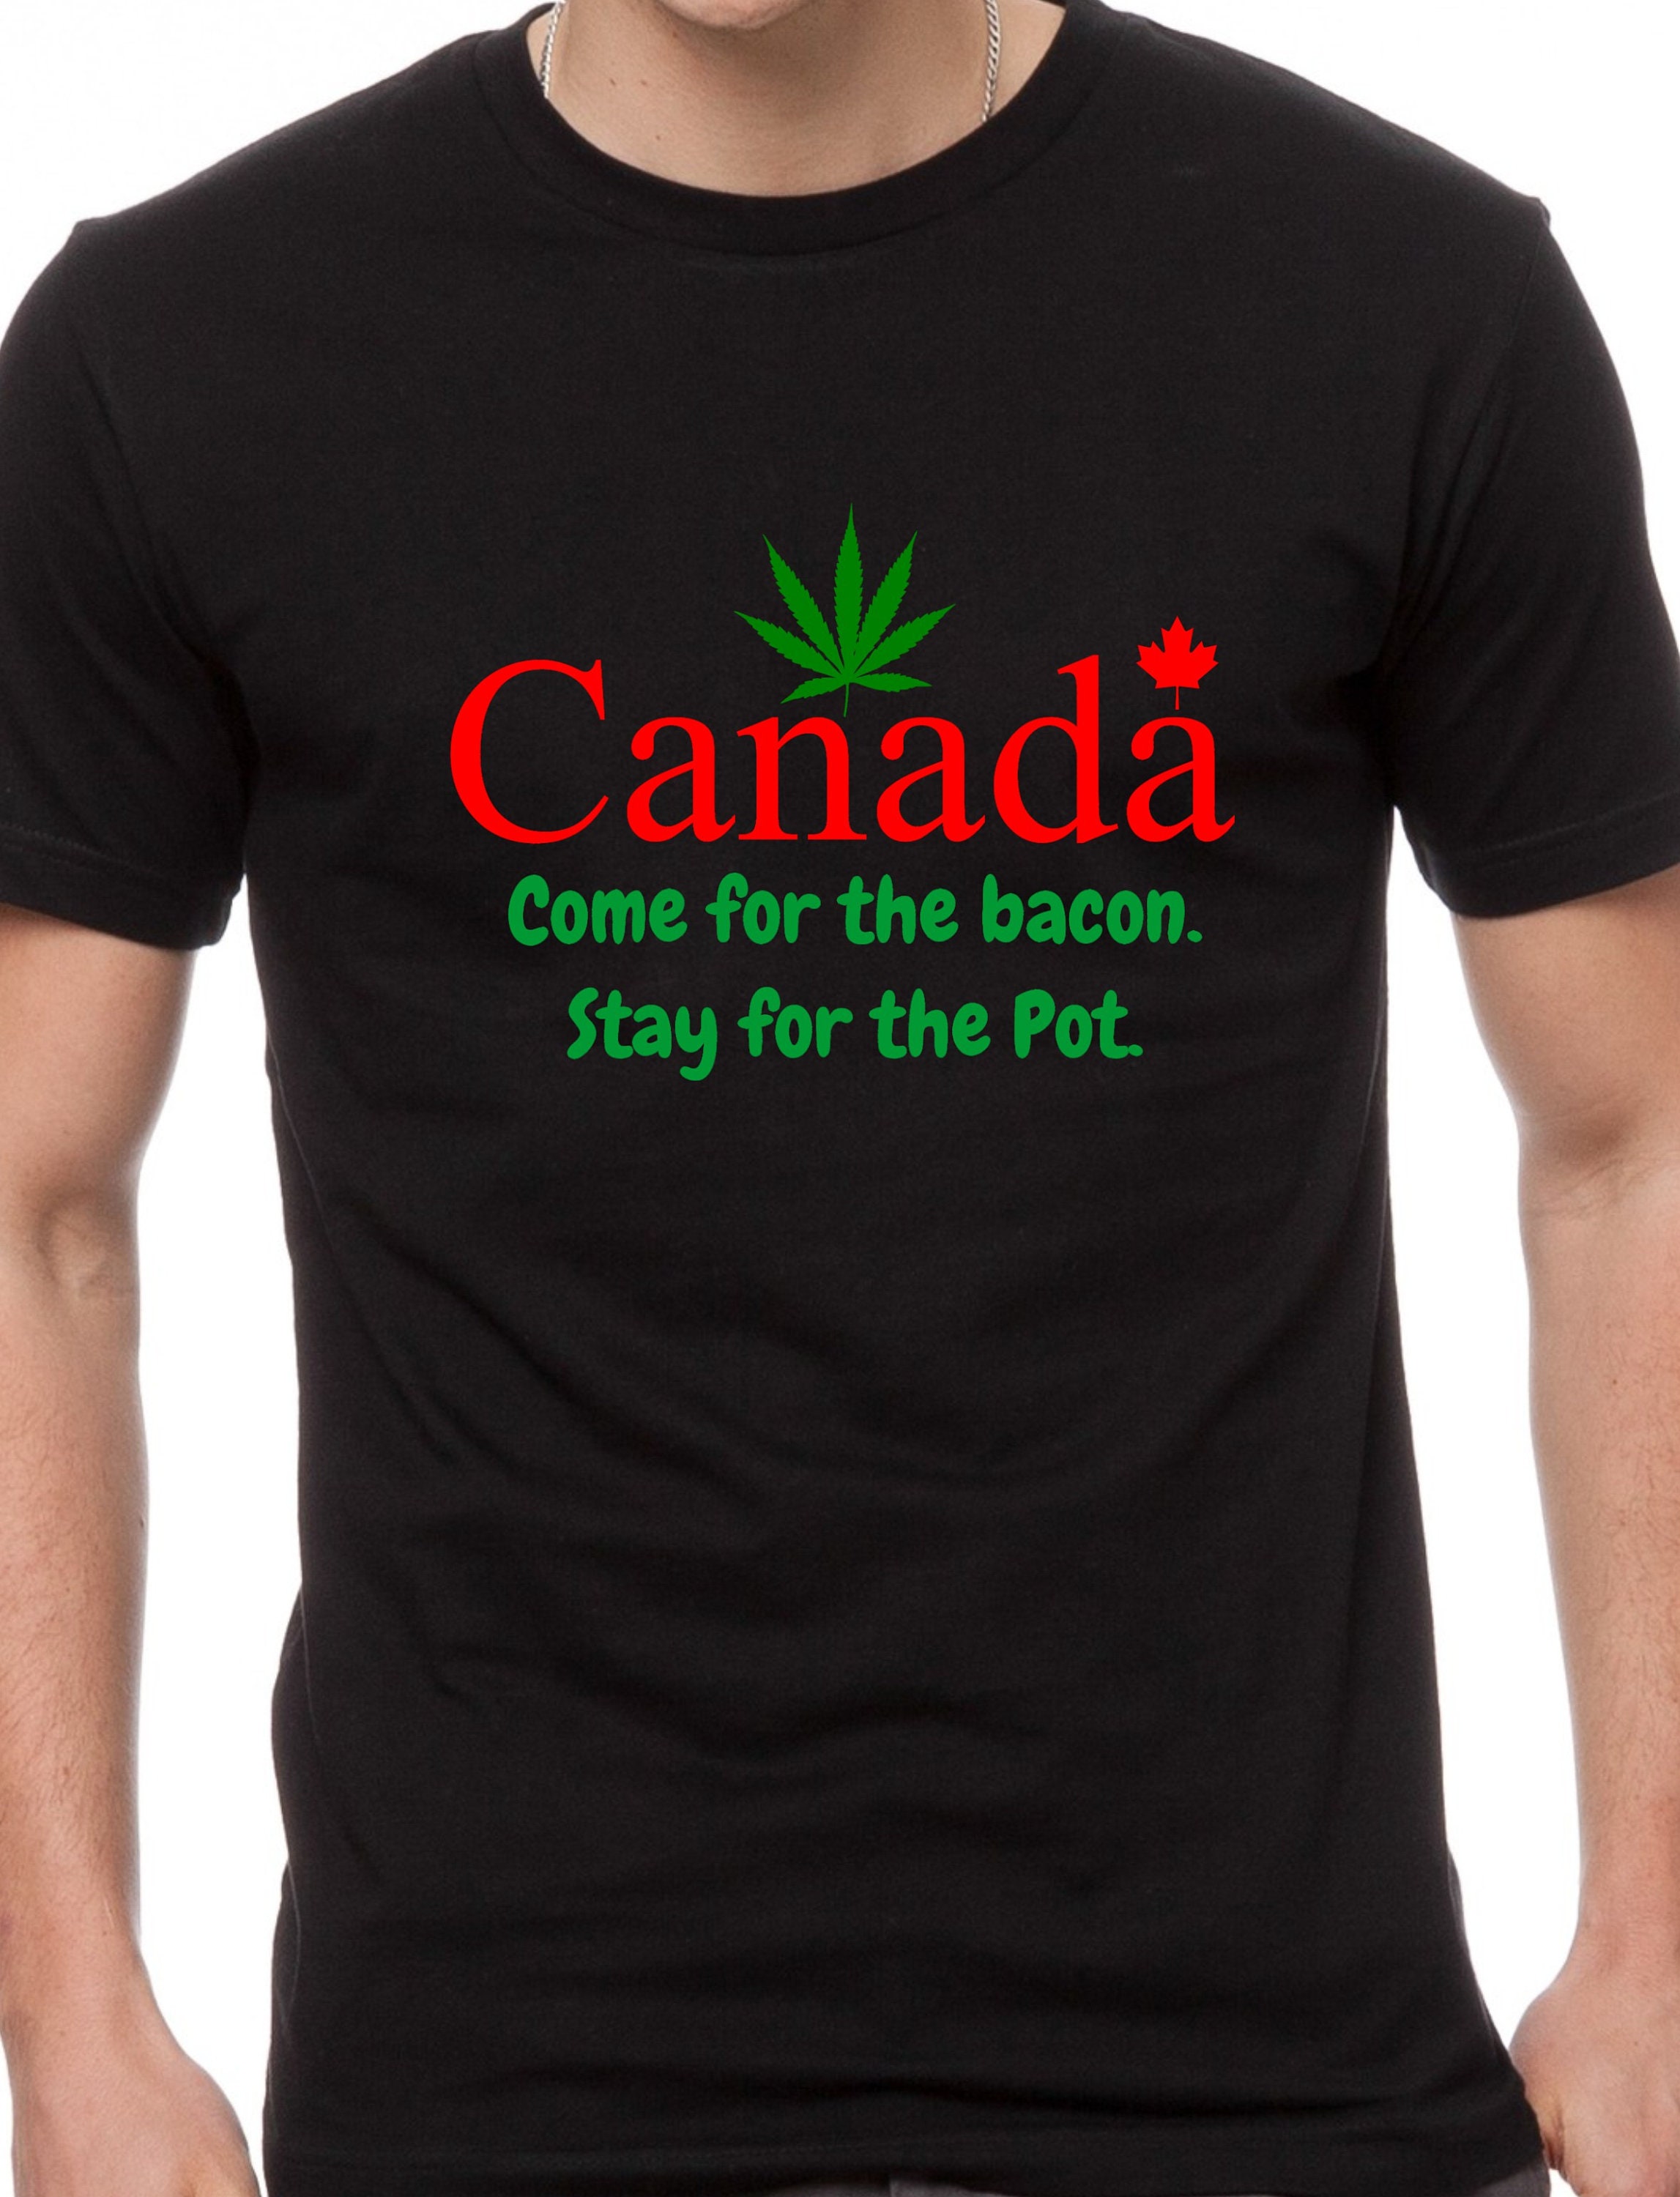 Canada Cannabis T Shirt Marijuana Shirts Pothead T Shirt - Denmark